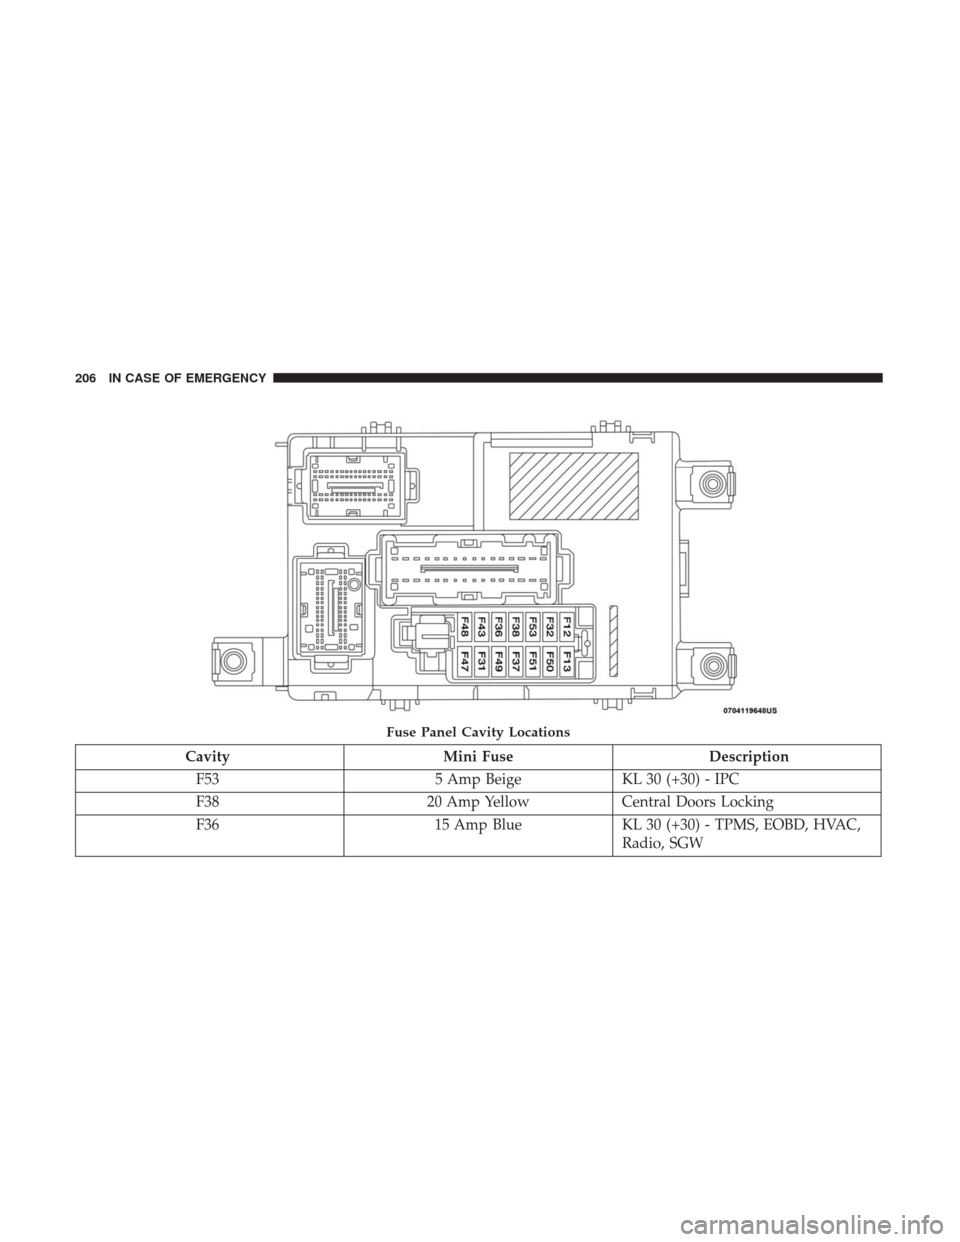 Ram ProMaster City 2018  Owners Manual CavityMini Fuse Description
F53 5 Amp BeigeKL 30 (+30) - IPC
F38 20 Amp YellowCentral Doors Locking
F36 15 Amp BlueKL 30 (+30) - TPMS, EOBD, HVAC,
Radio, SGW
Fuse Panel Cavity Locations
206 IN CASE OF